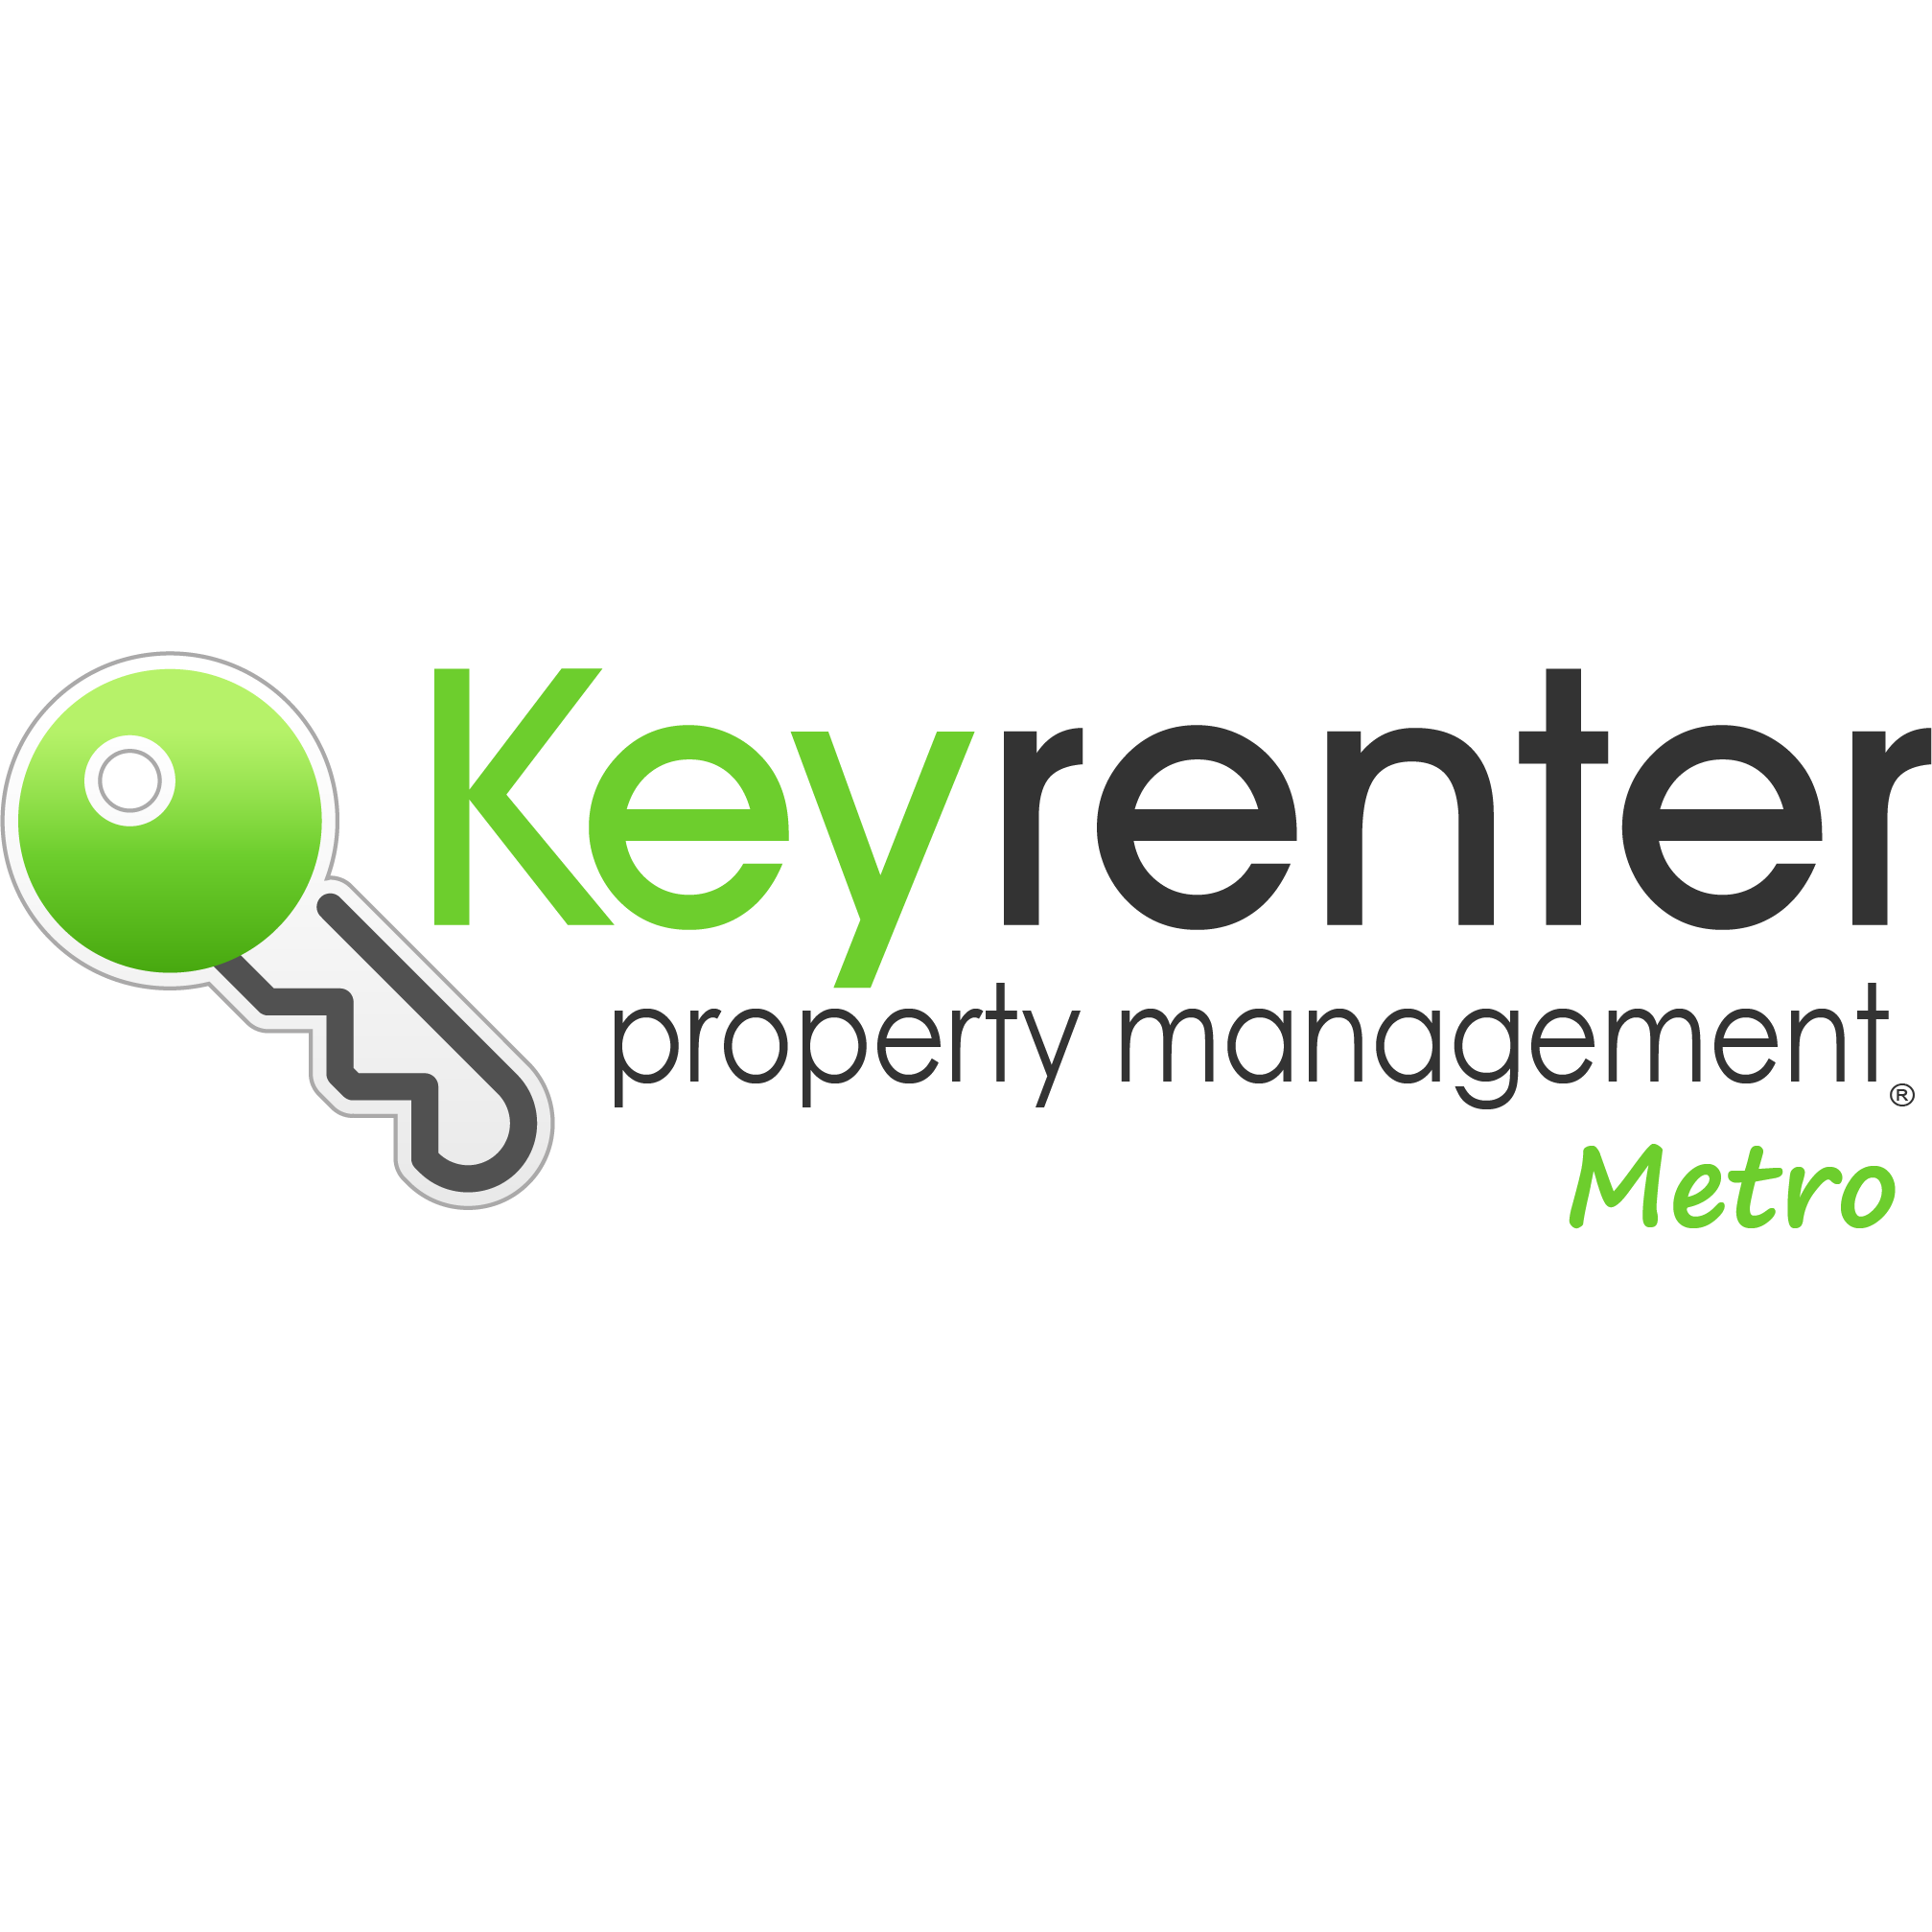 Keyrenter Property Management Metro Logo